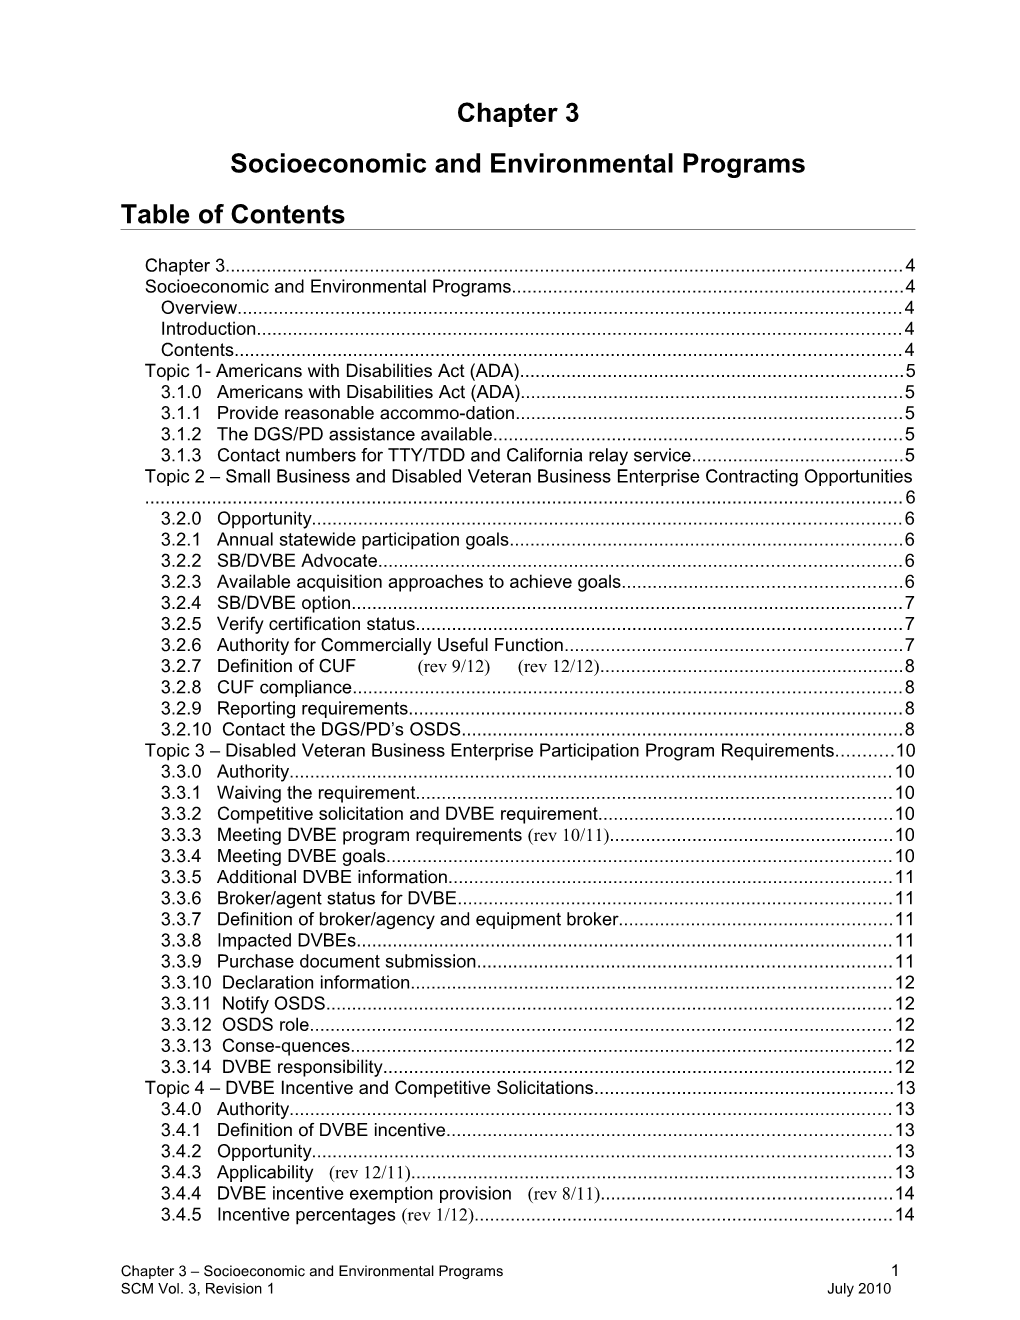 Socioeconomic and Environmental Programs